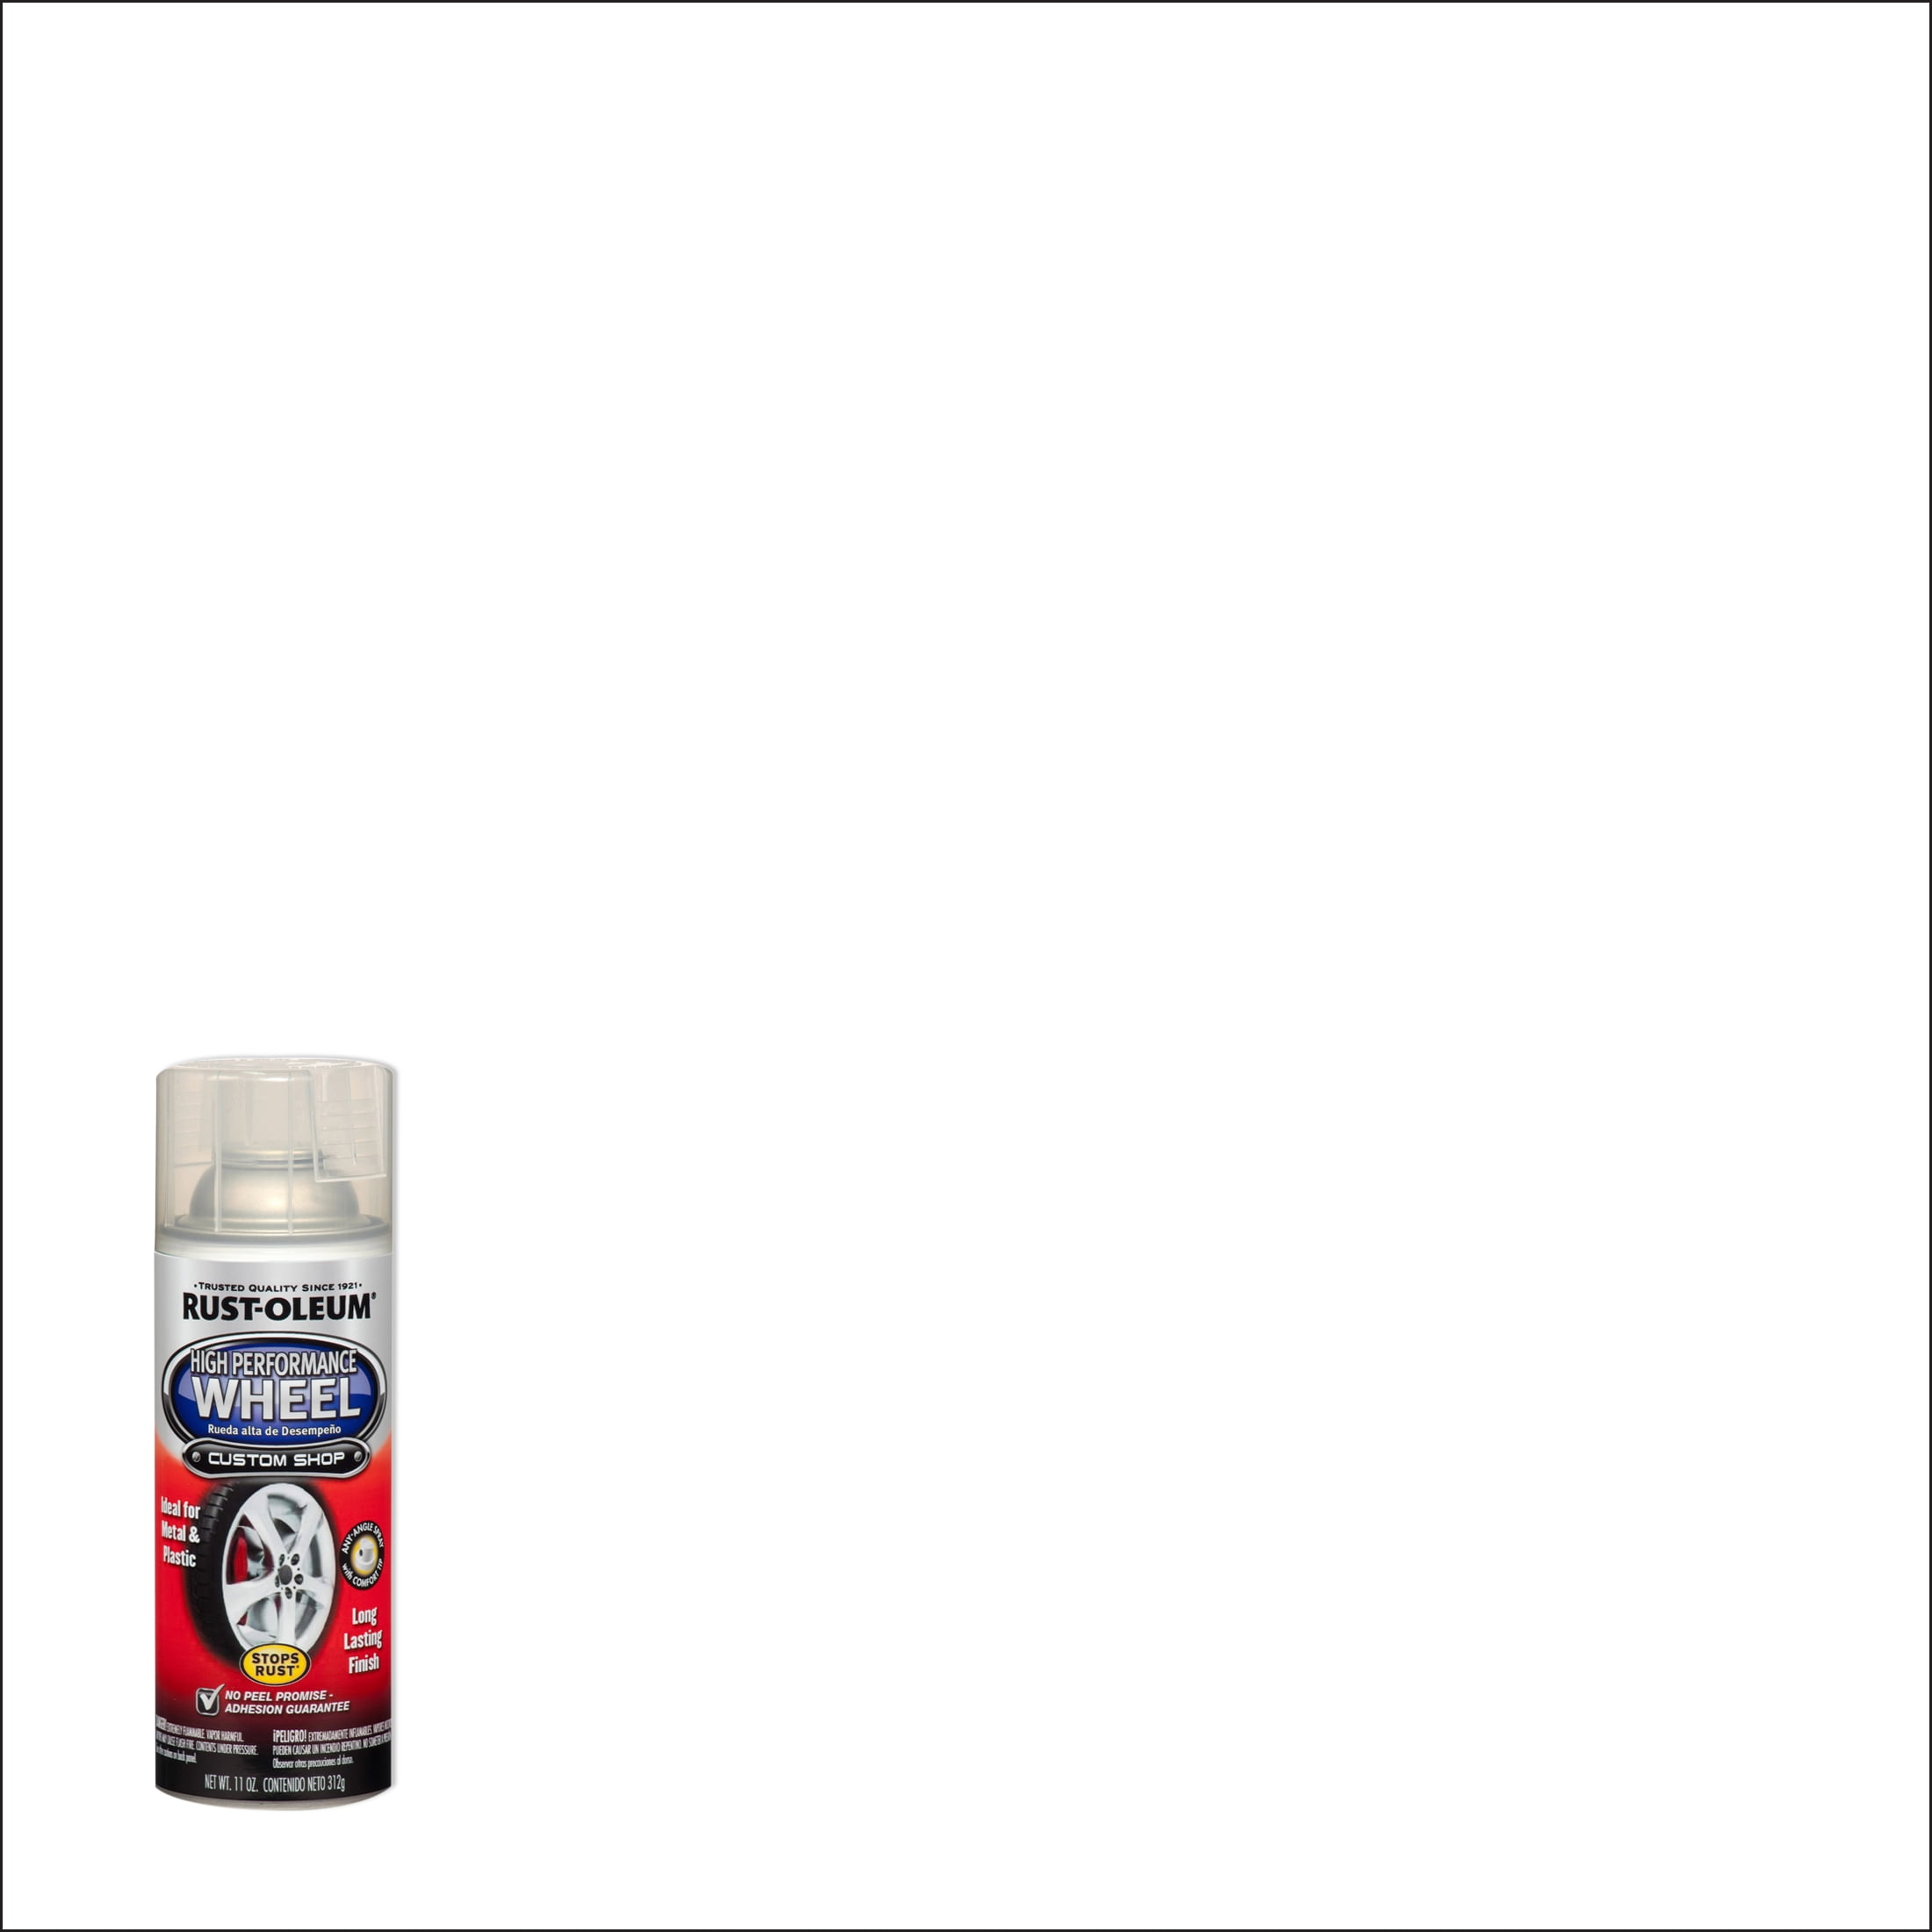 Bluefin Distribution Toys Mr. Super Clear Uv Cut Flat Spray, Original Version, 170 ml